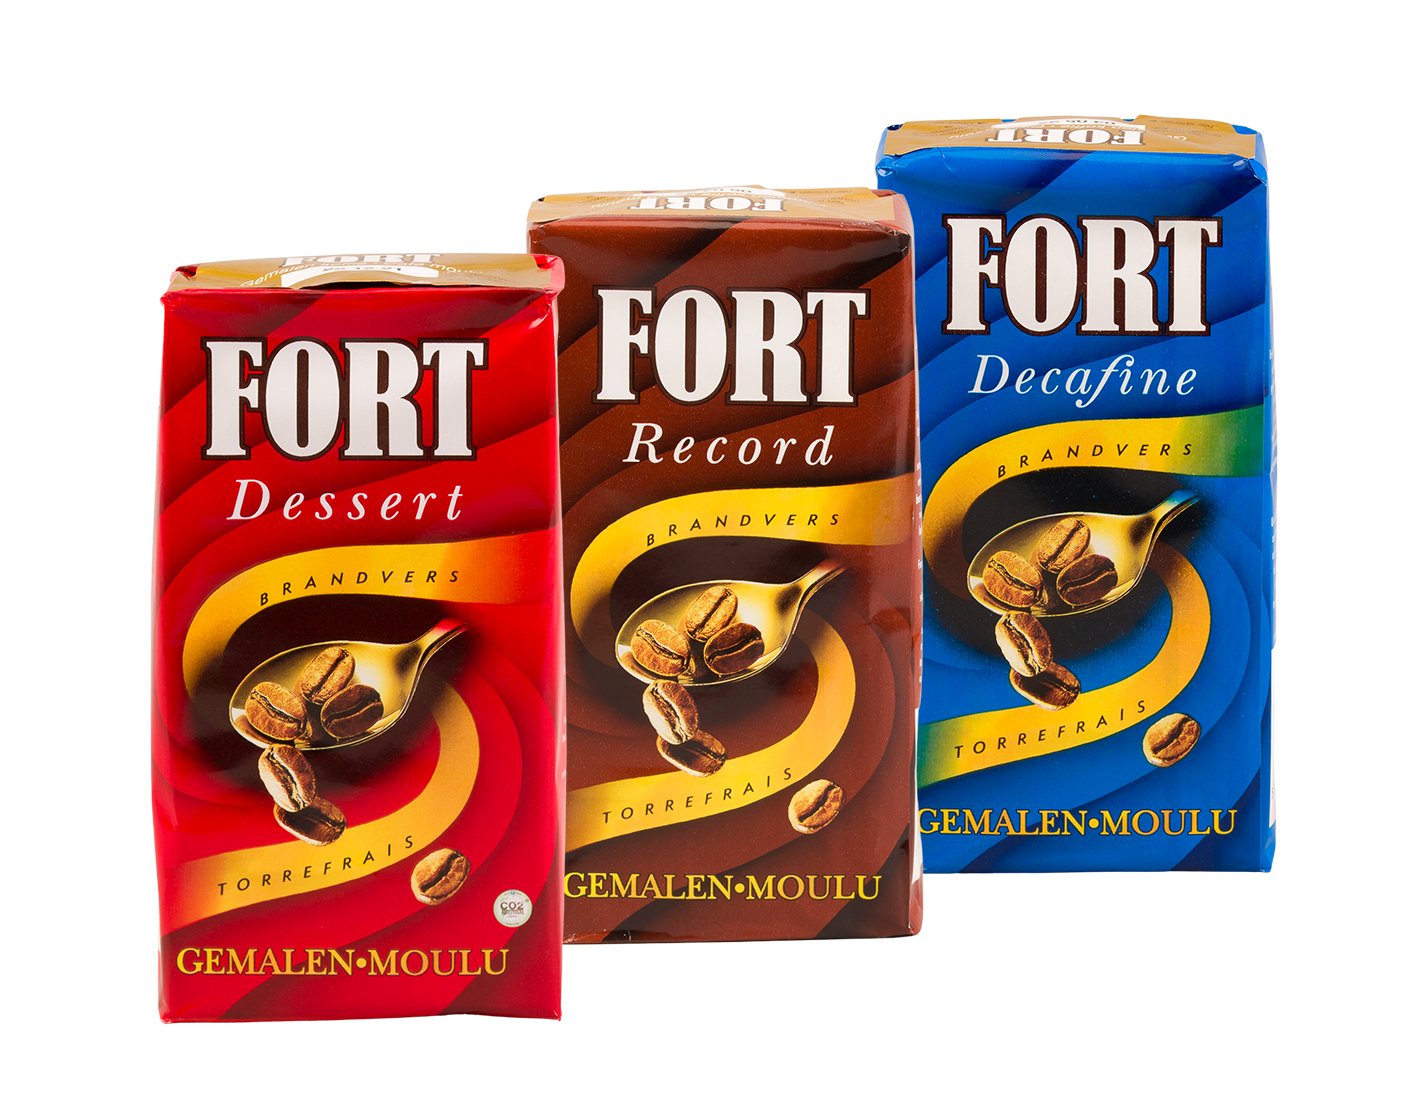 Fort Koffie packs